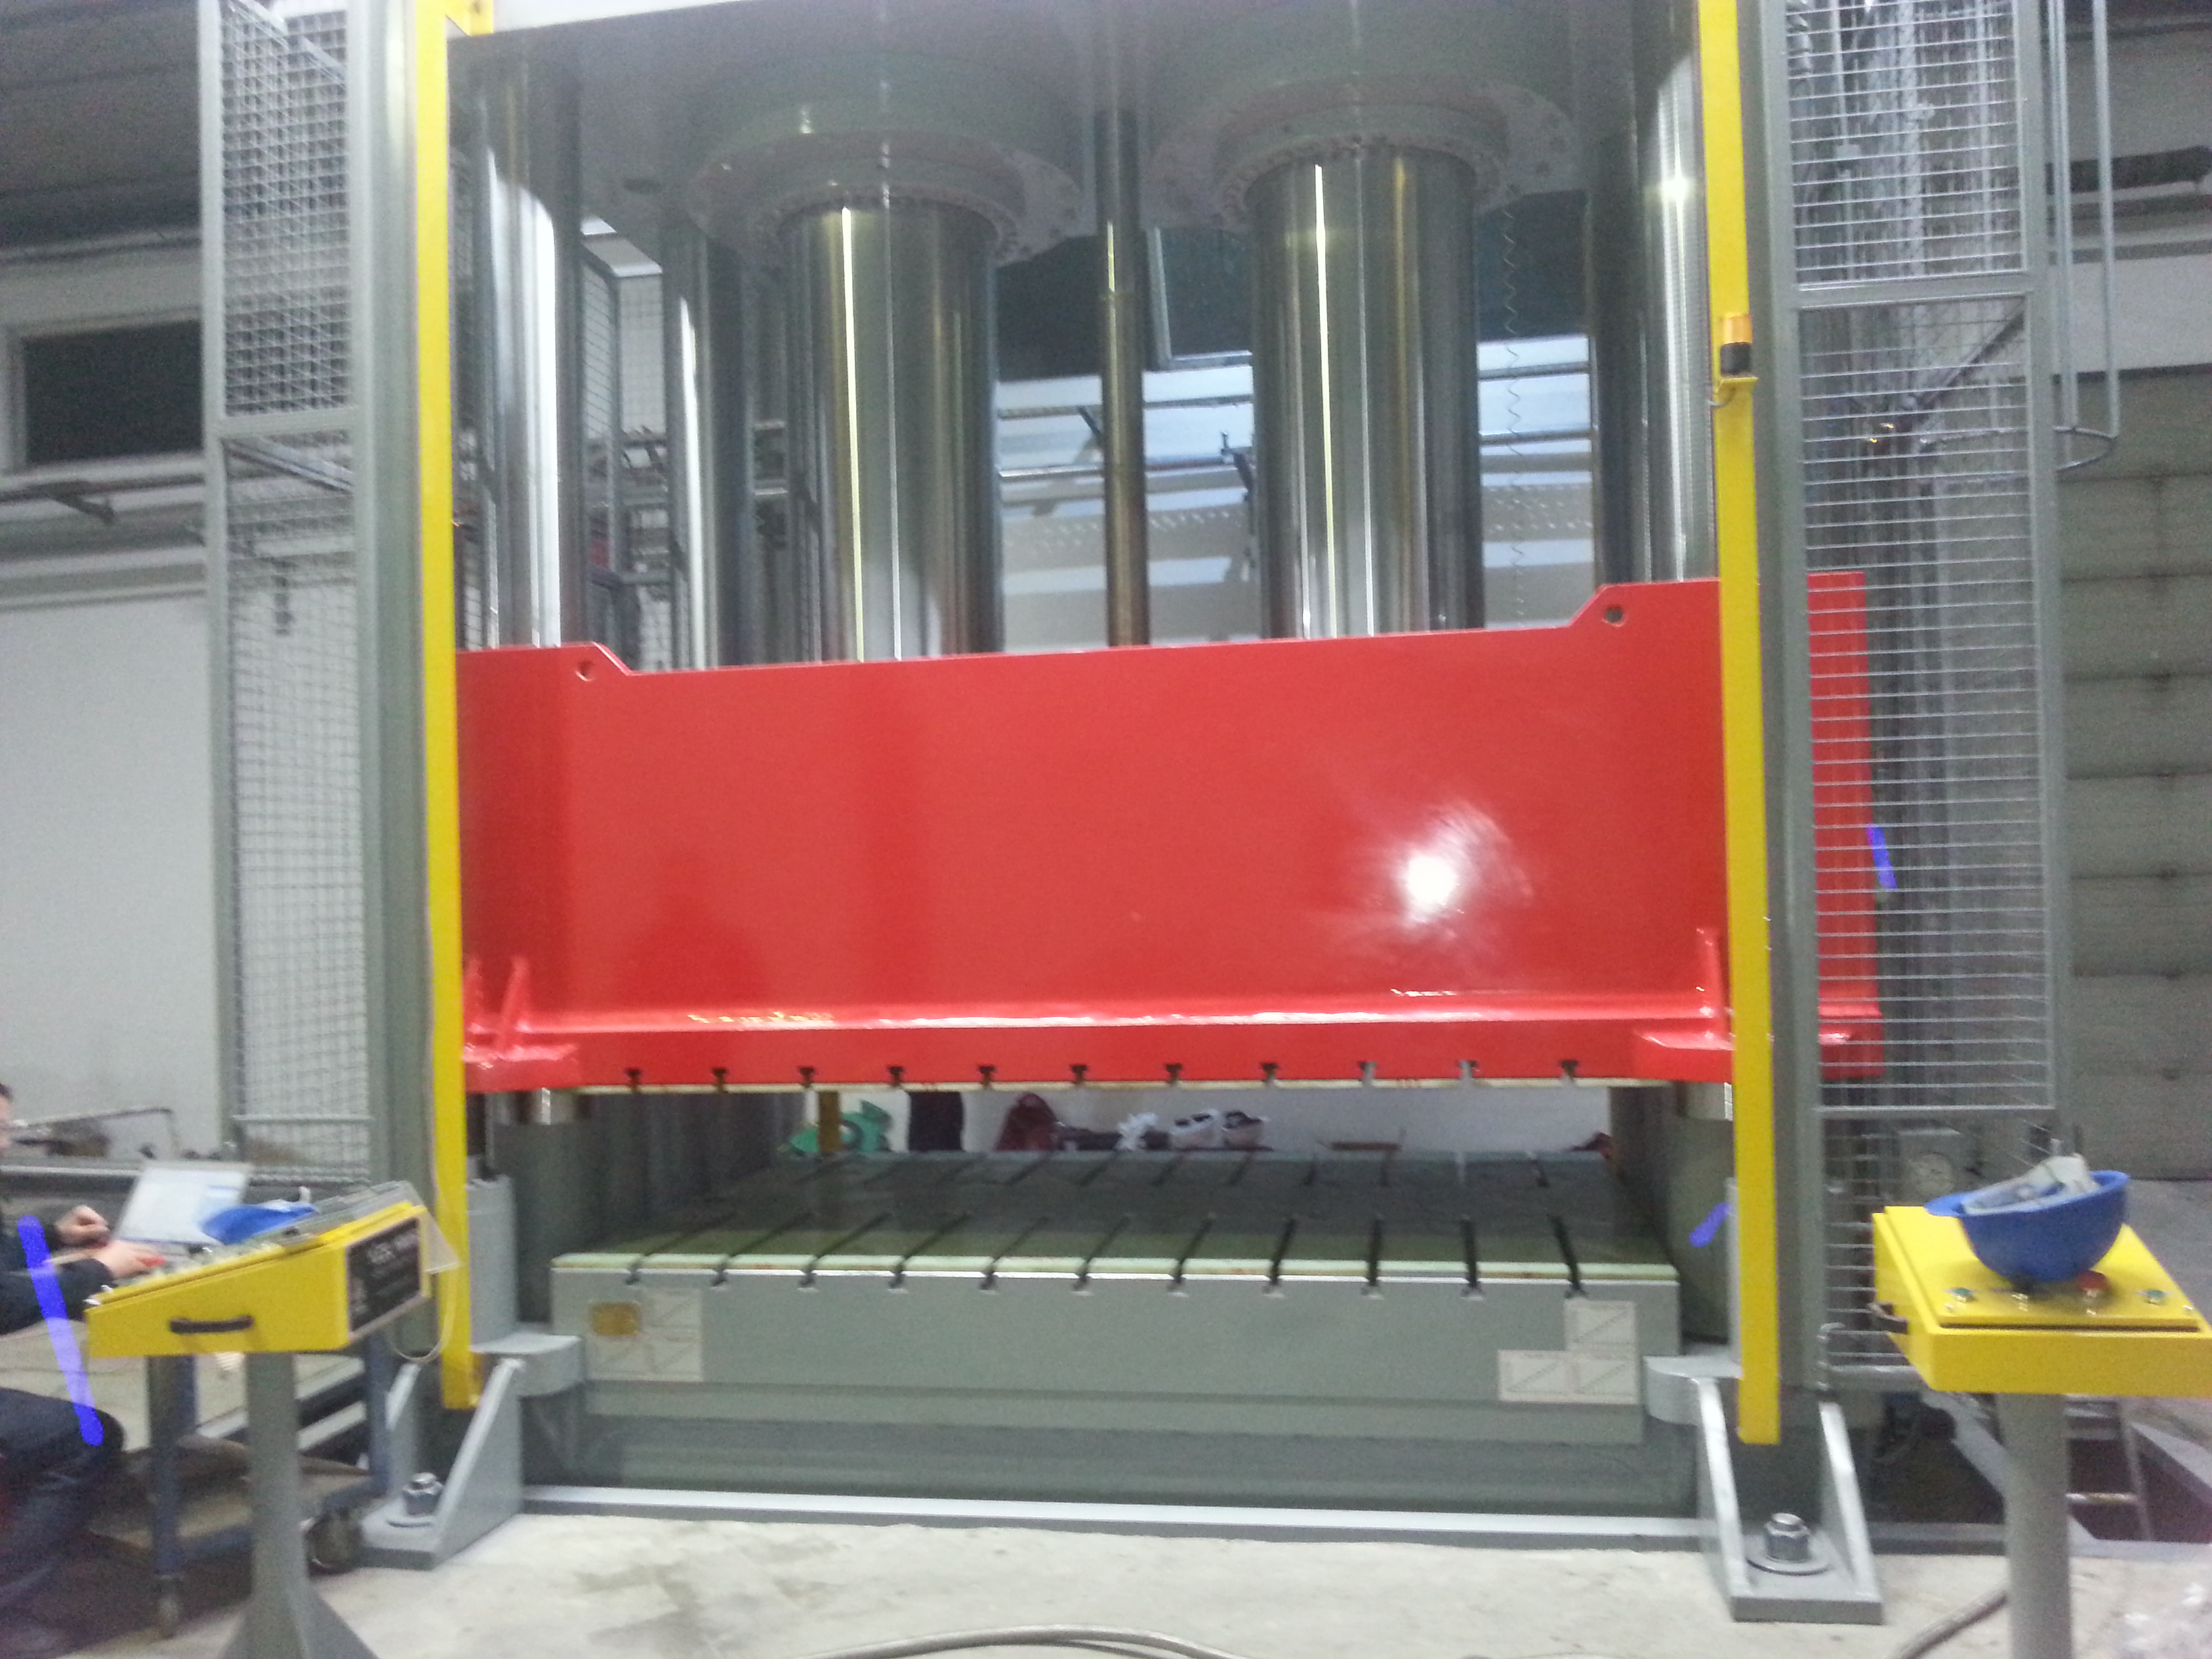 Top 5 Hydraulic Press Machines in factories